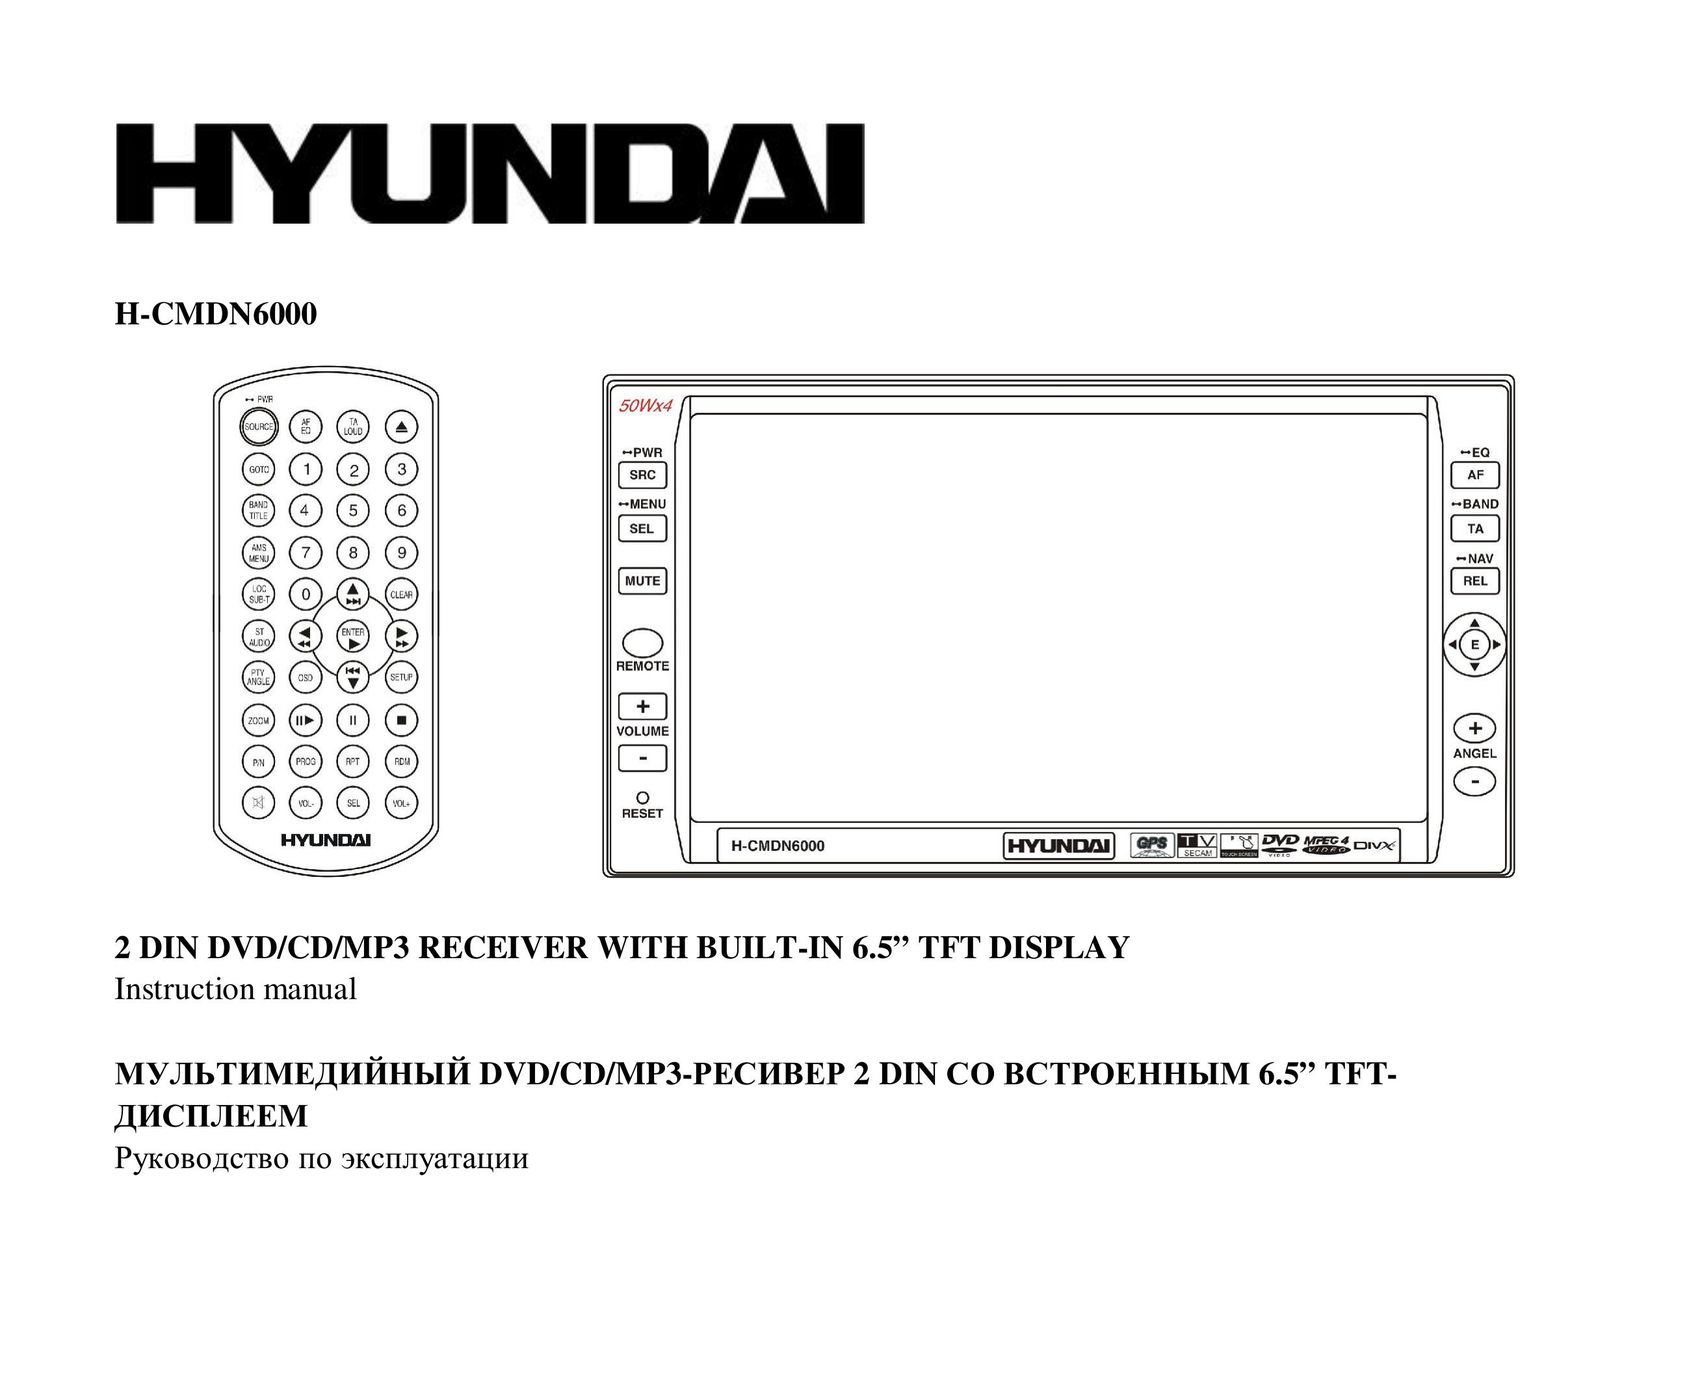 Hyundai H-CMDN6000 Car Stereo System User Manual